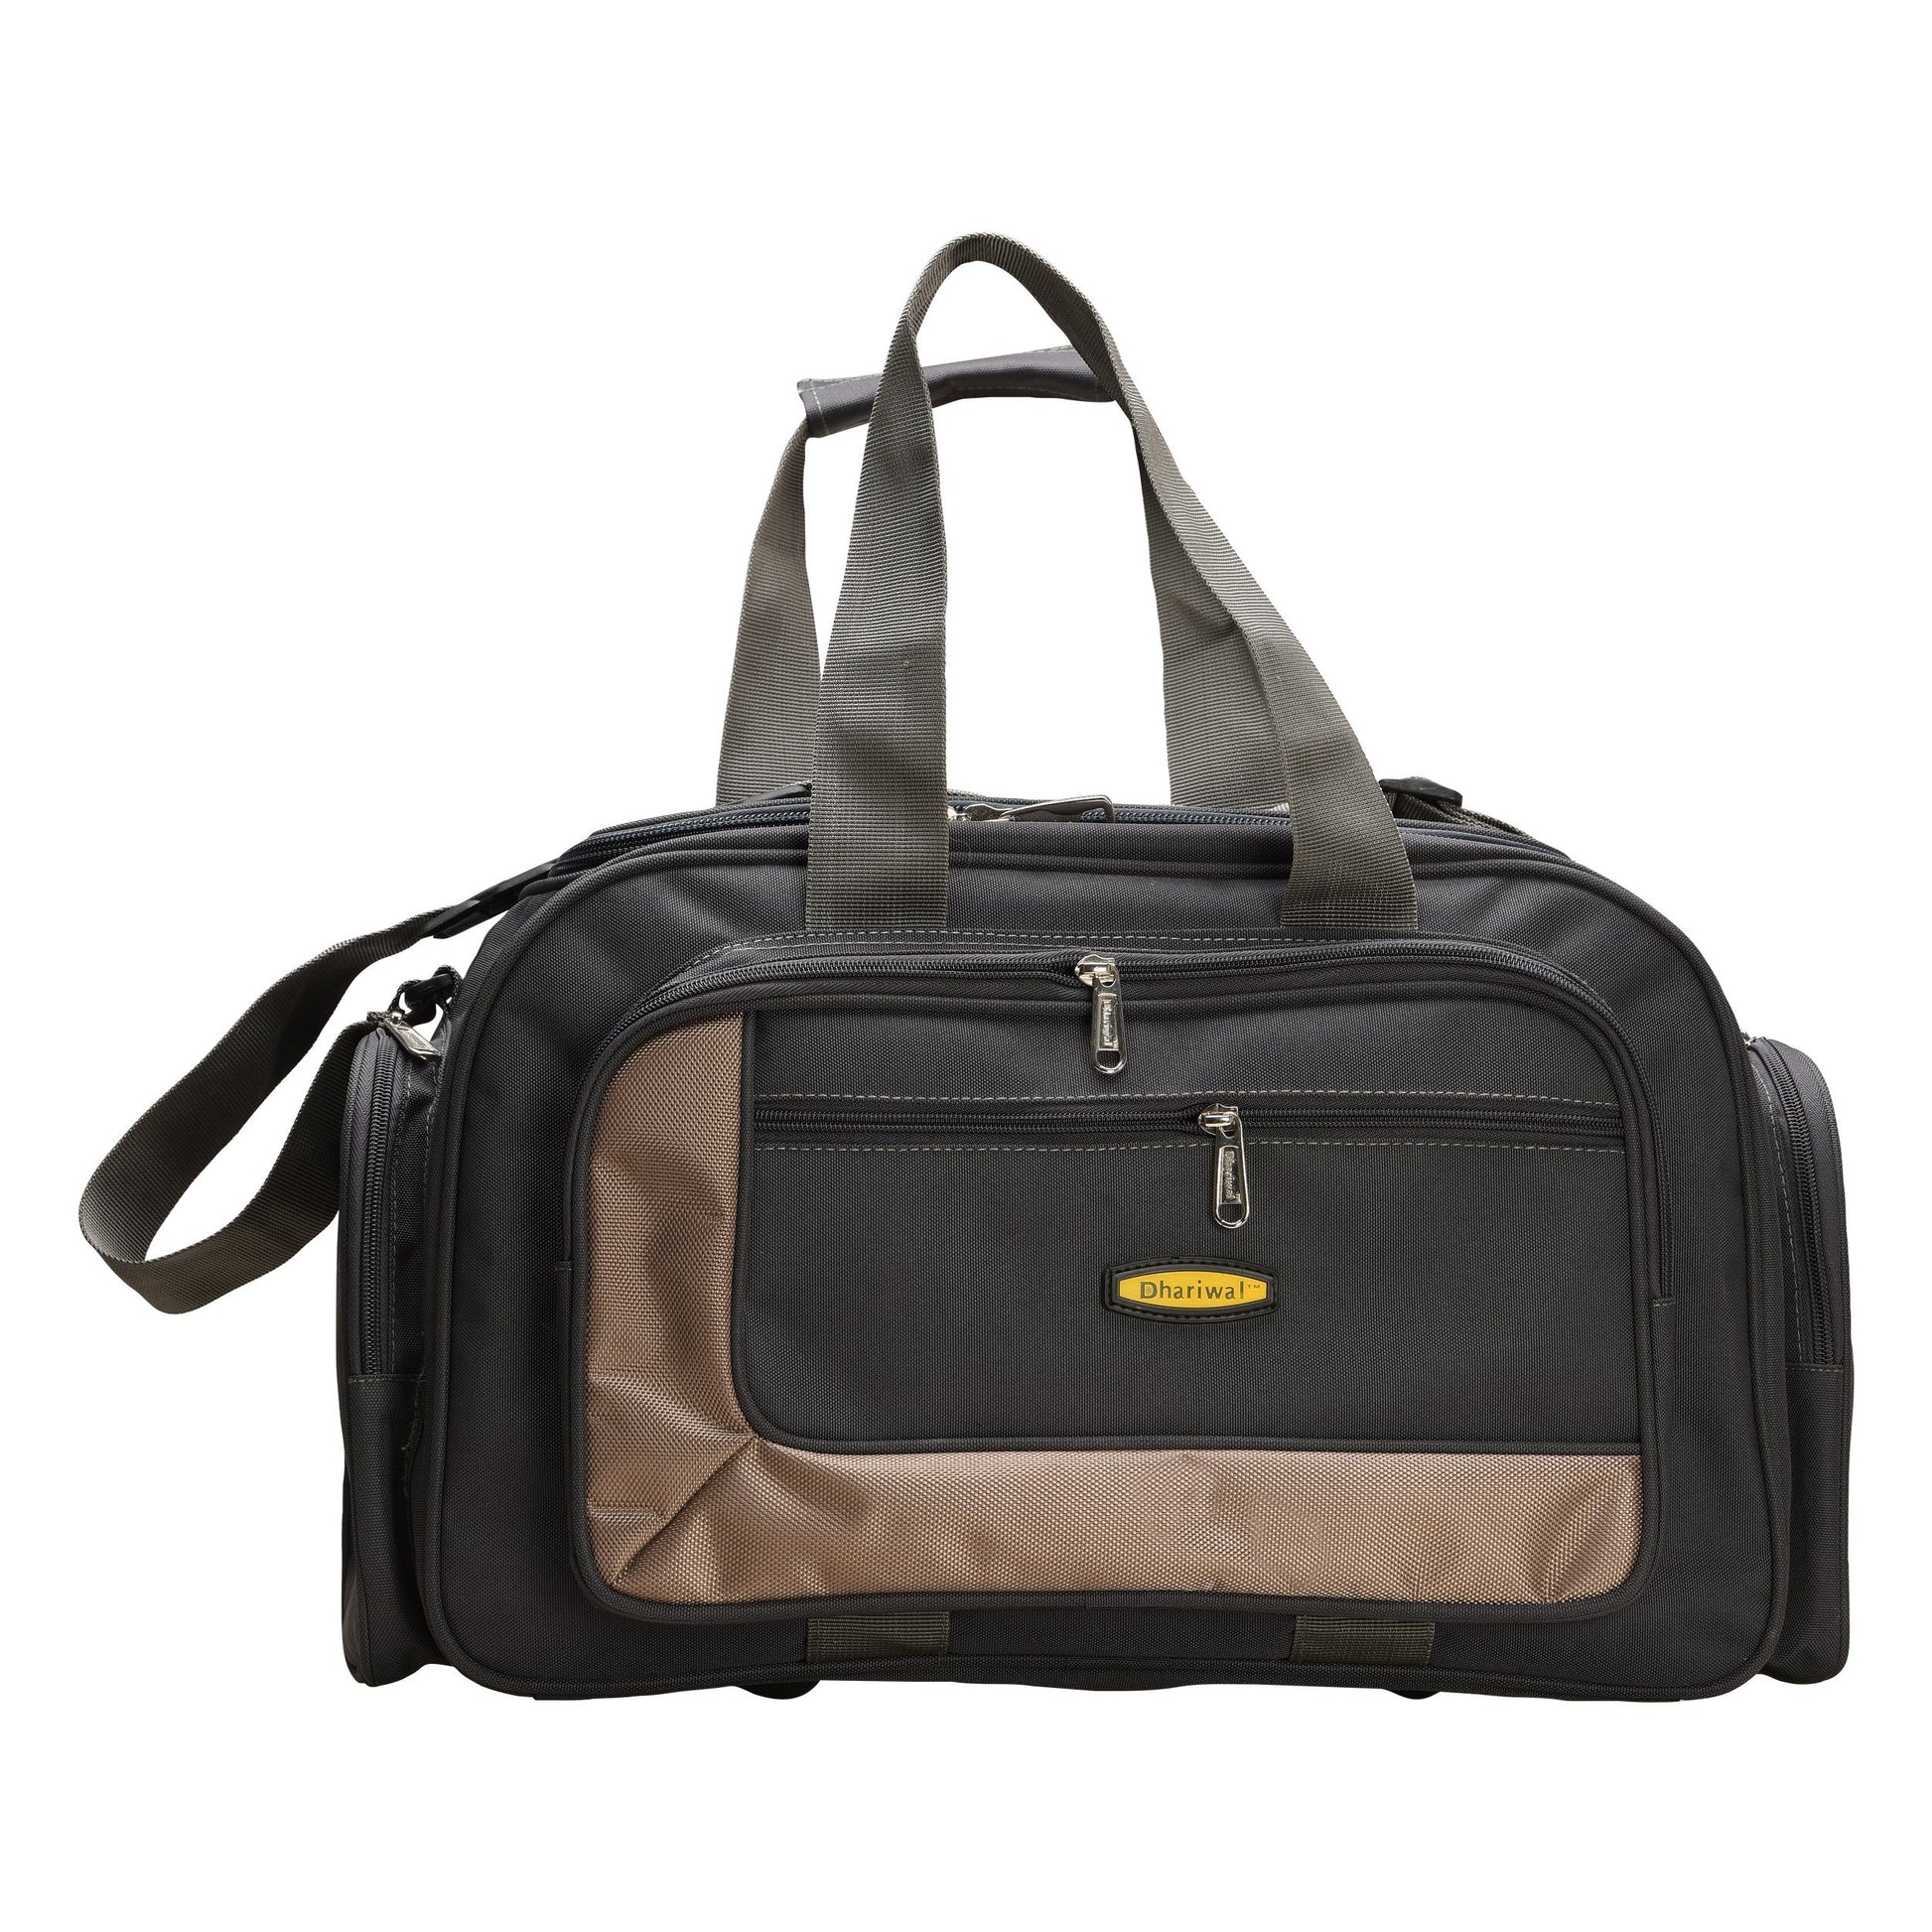 Handy Travelling Bag D Design 900 X 900 Matty 61cm x 30cm x 28 cm TRB-501 Travelling Bags Dhariwal Grey 